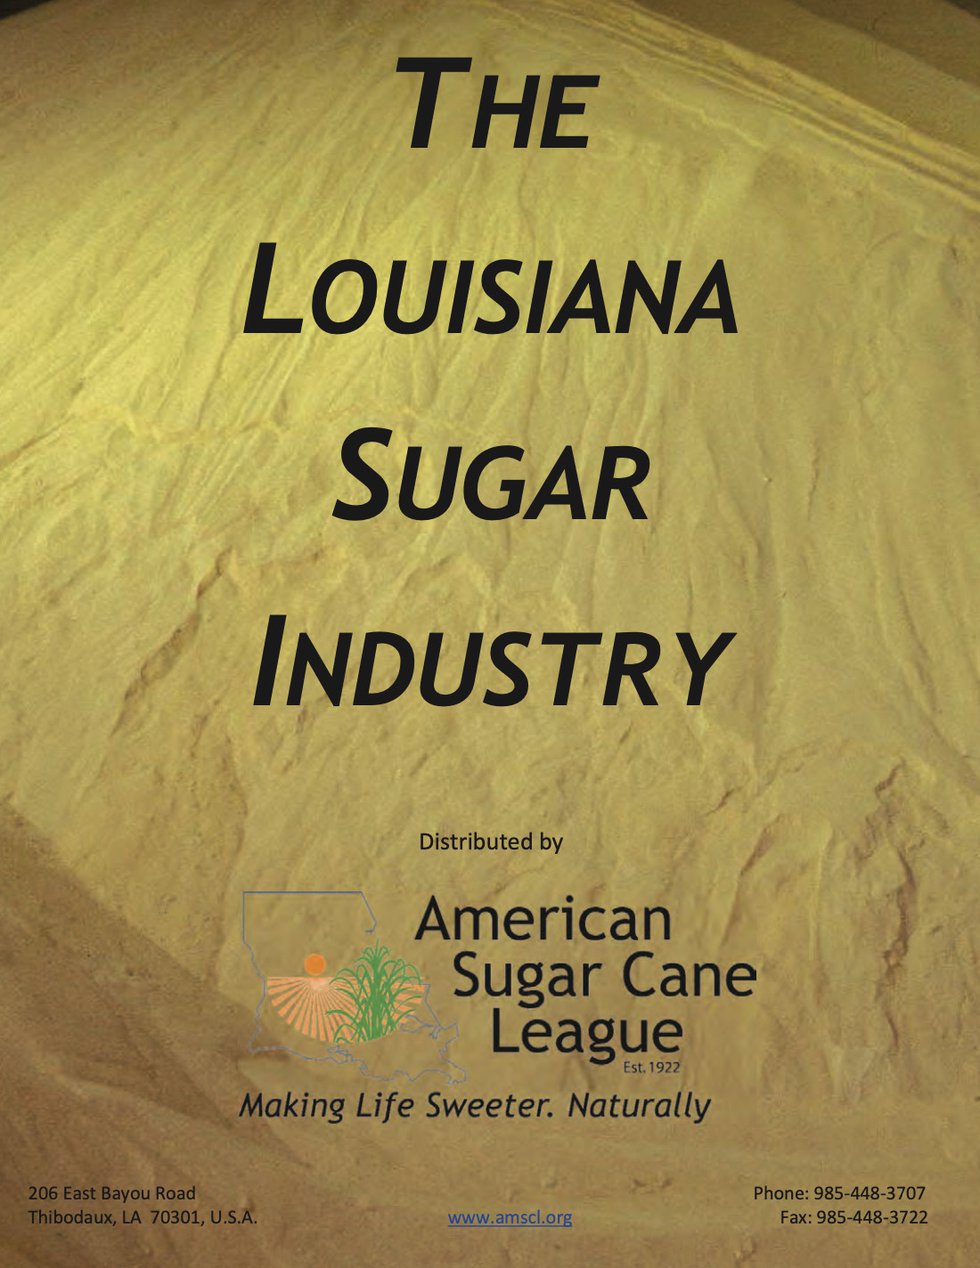 The Louisiana Sugar Industry